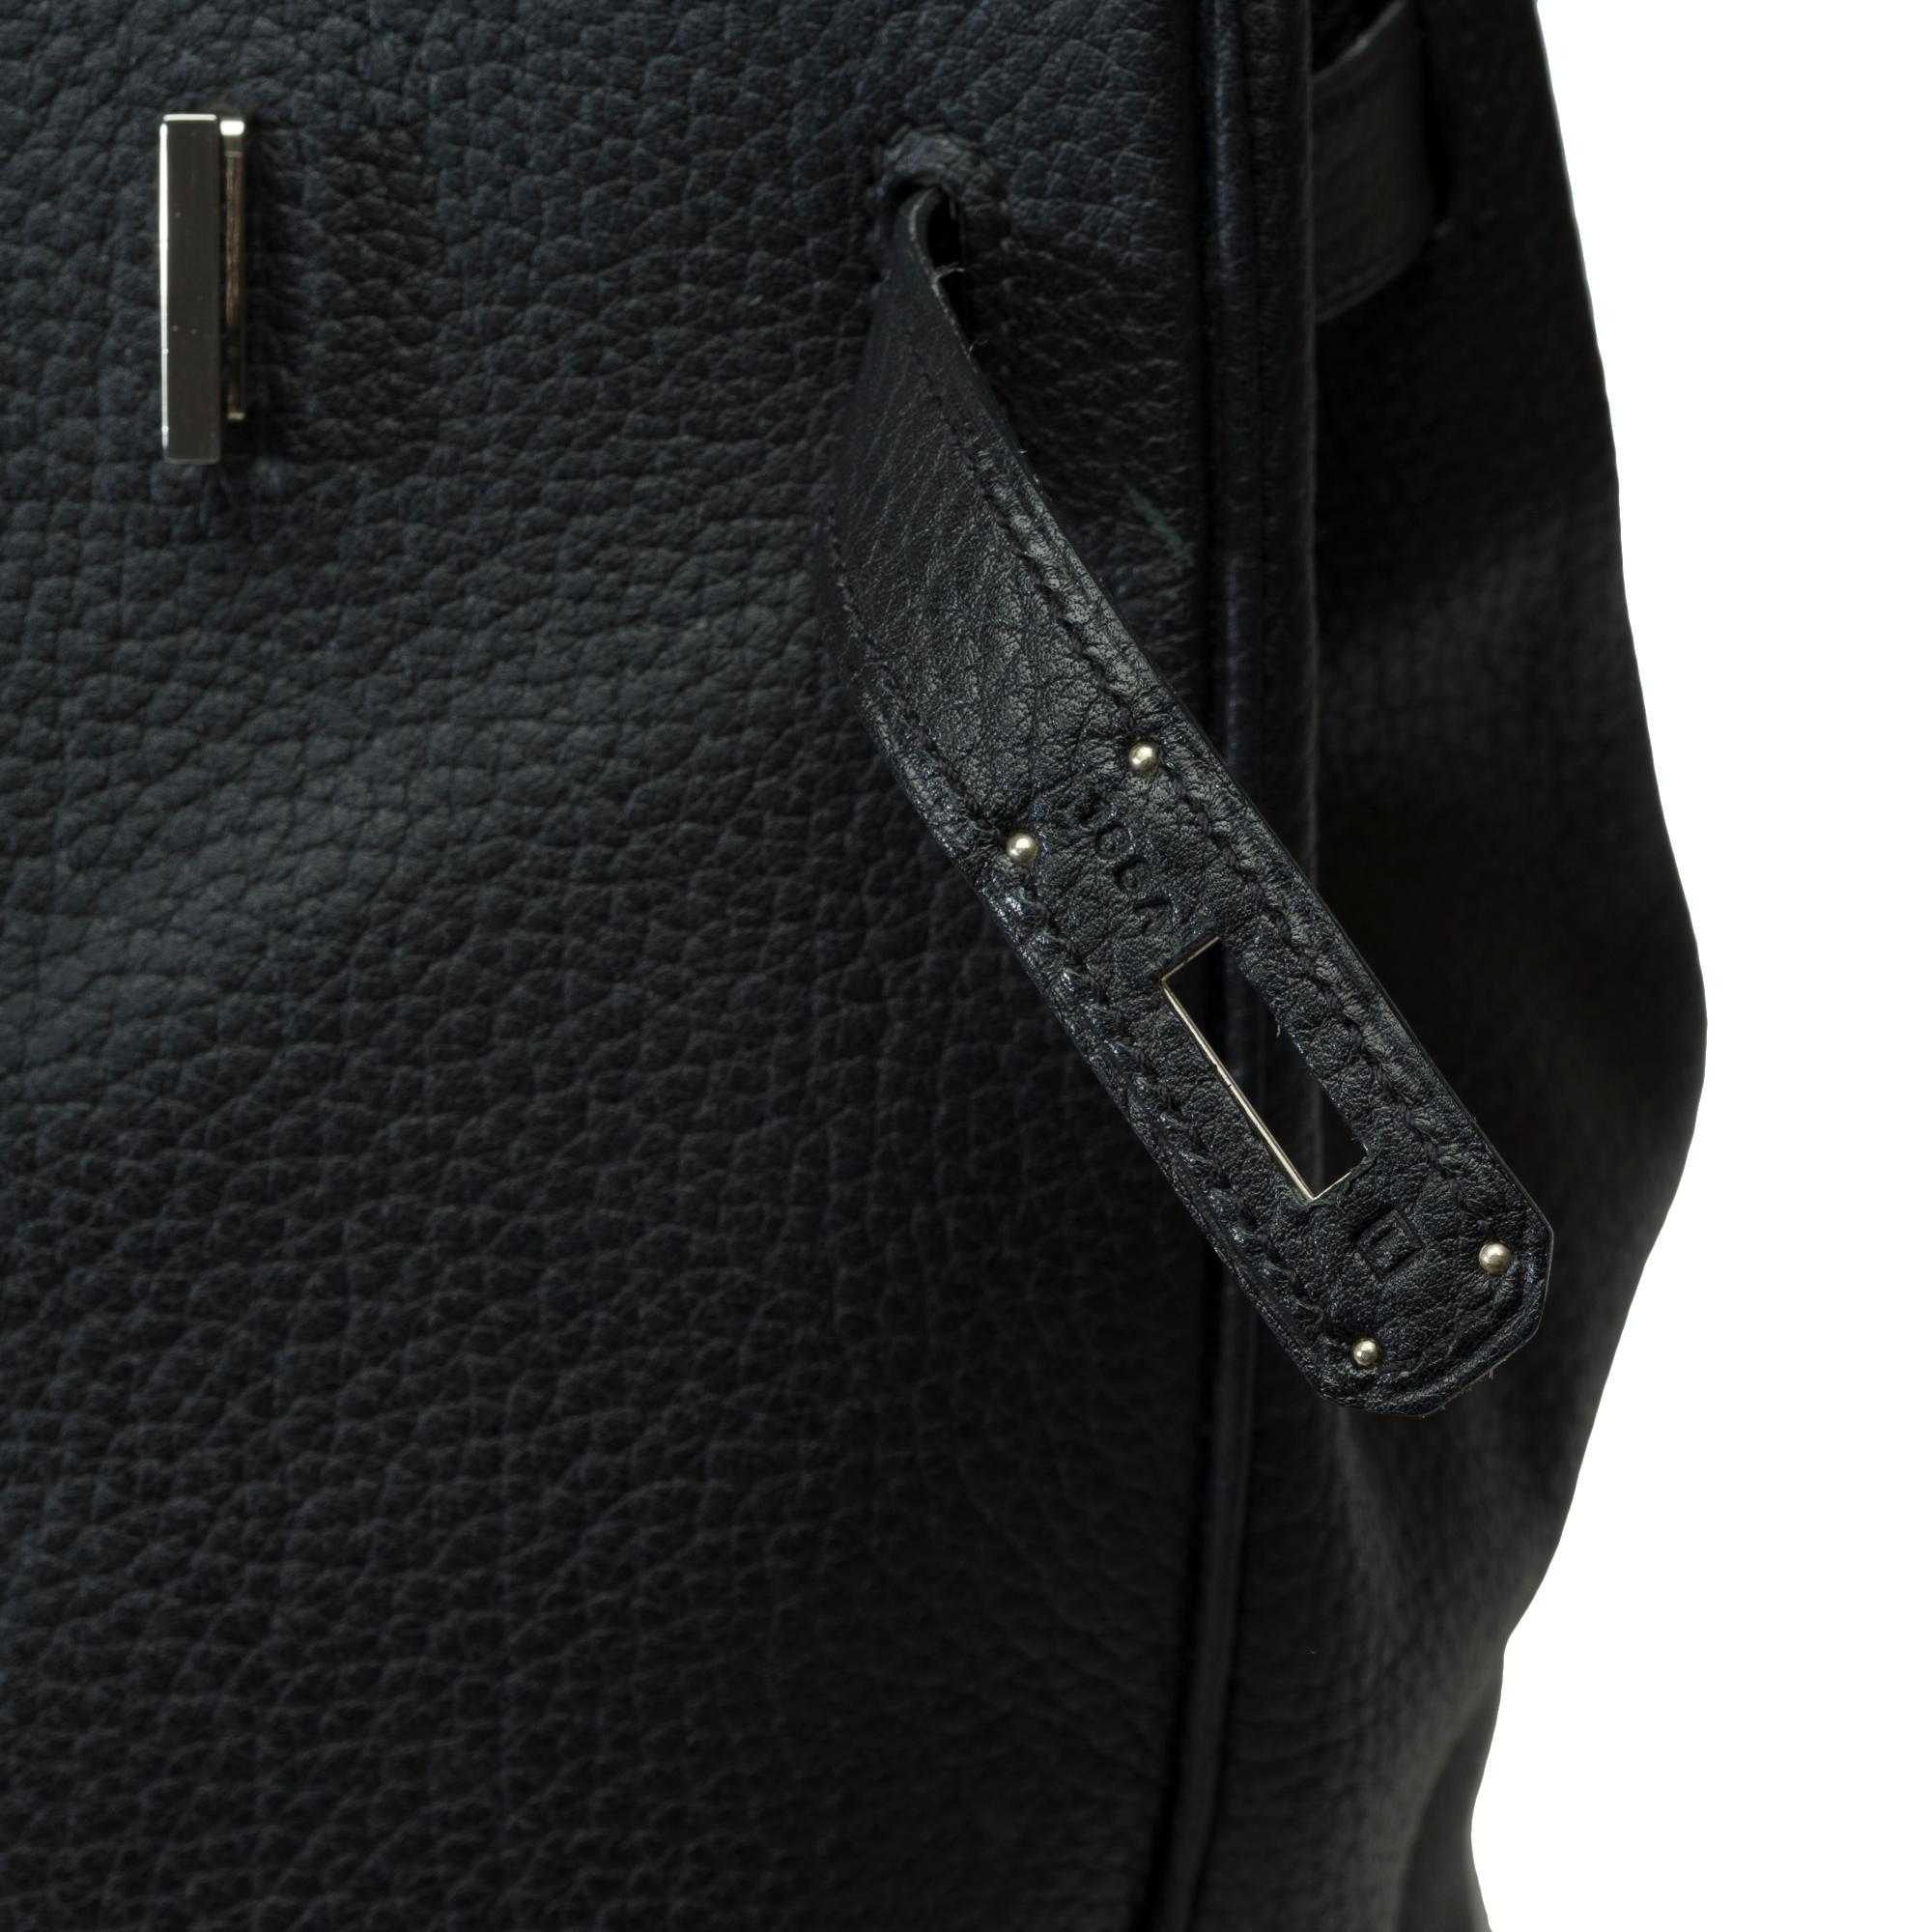 Classy Hermes Birkin 40cm handbag in Black Fjord calf leather, SHW For Sale 3